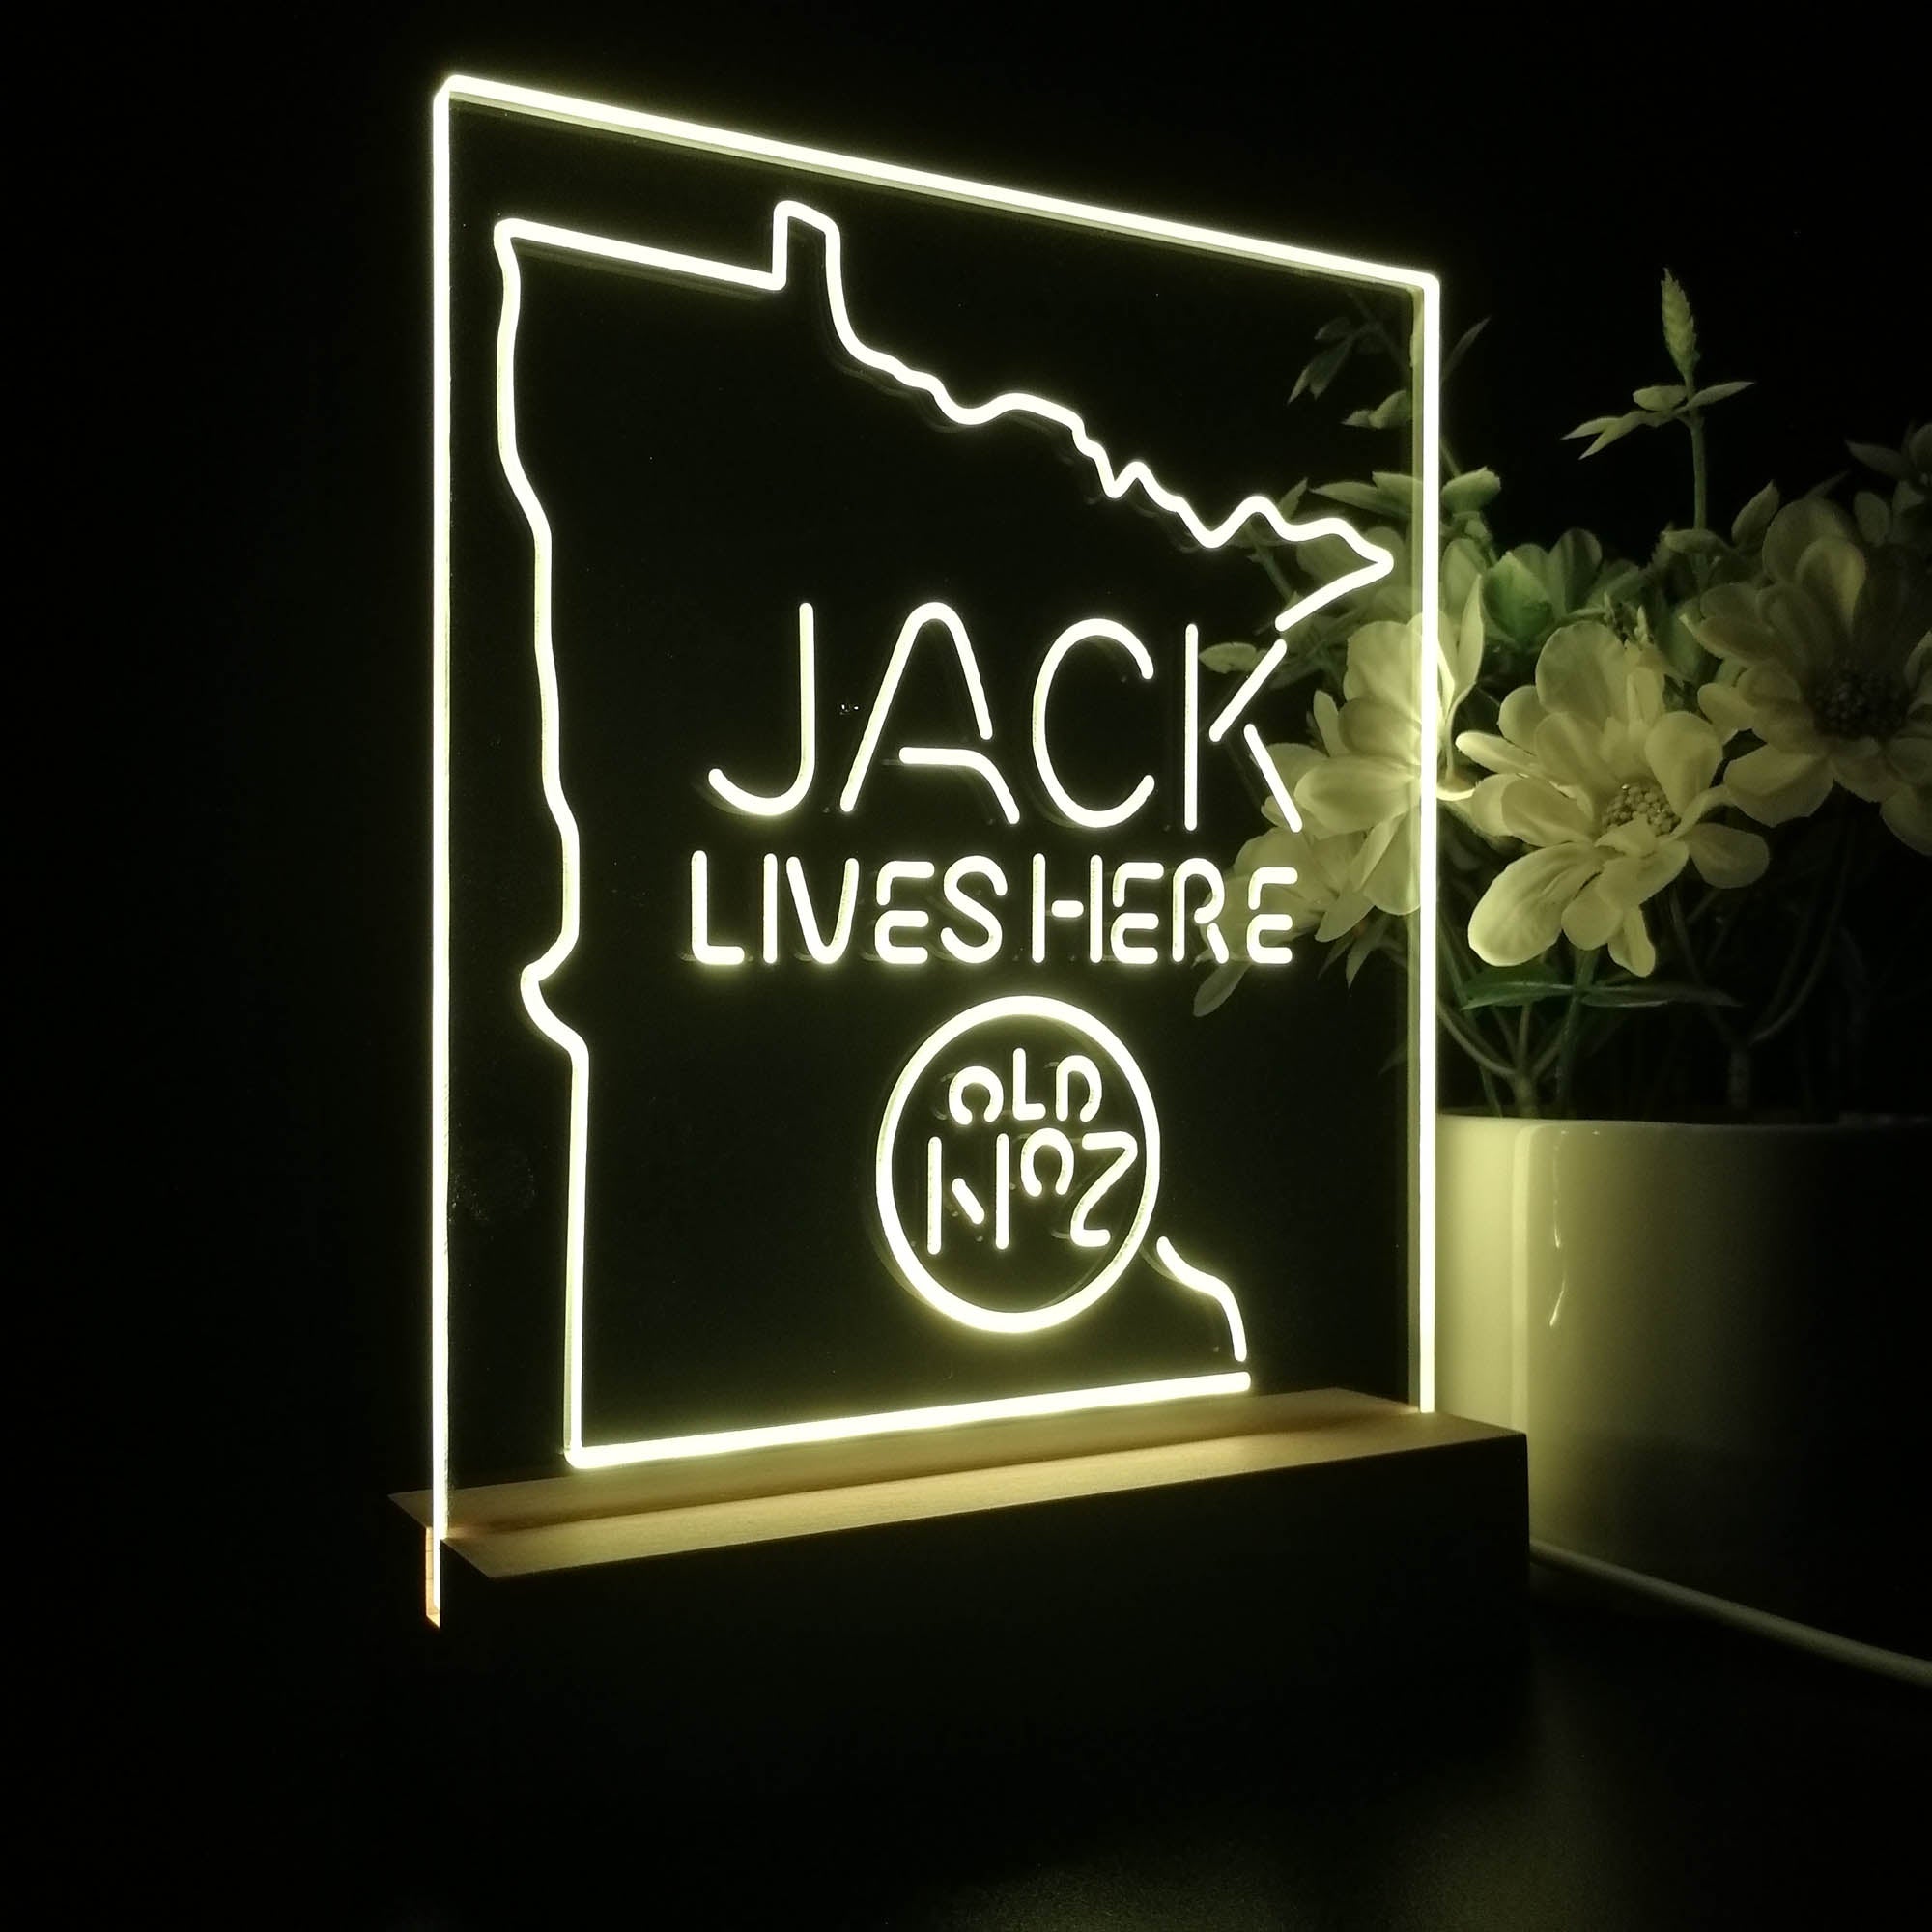 Minnesota Jack Lives Here Night Light Neon Pub Bar Lamp